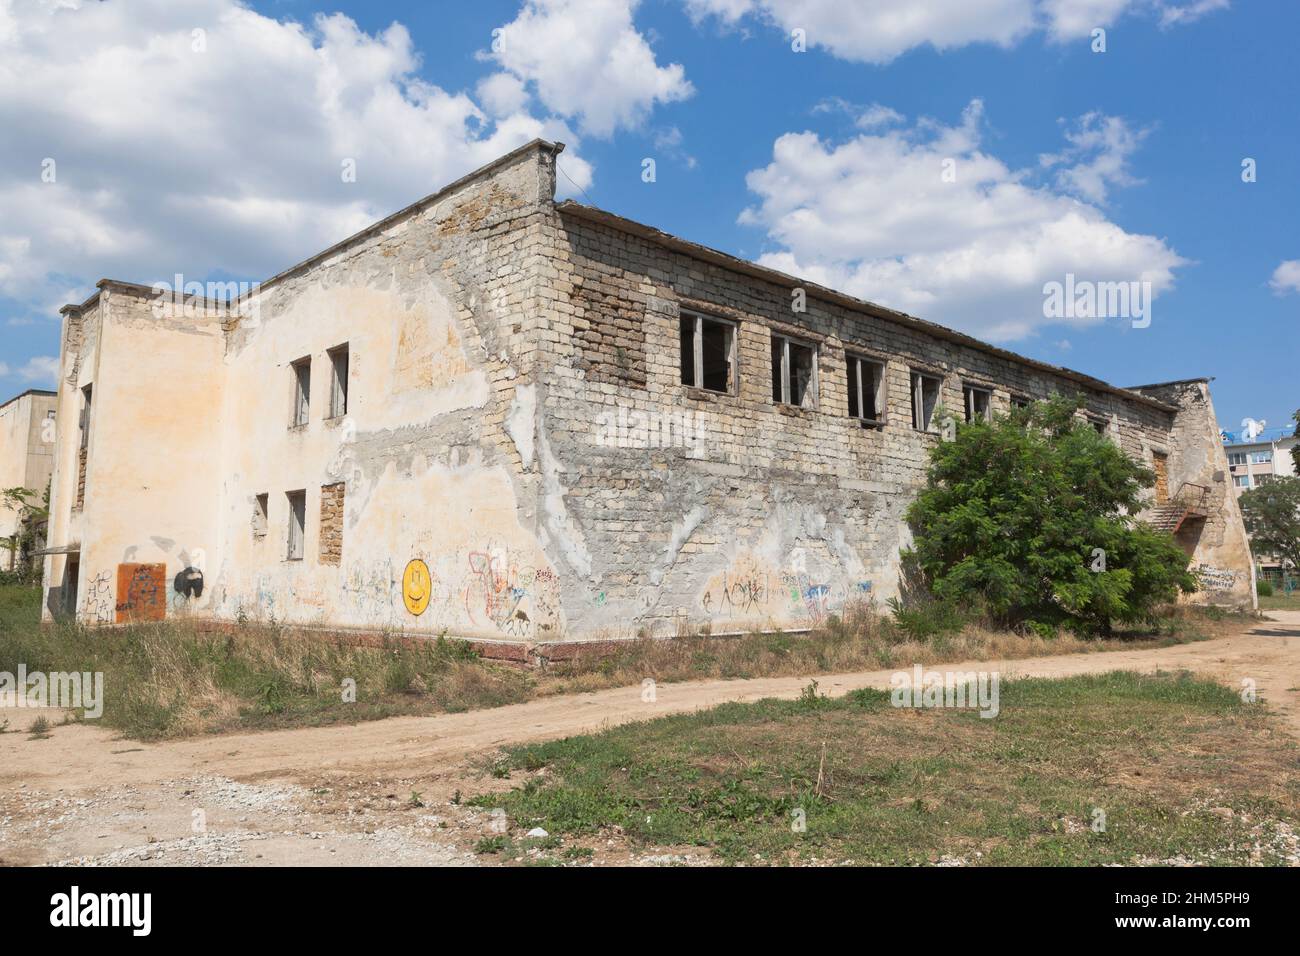 Uyutnoye village, Saksky district, Crimea, Russia - July 18, 2021: A crumbling building on Kirov street in the village of Uyutnoye, Saksky district, C Stock Photo